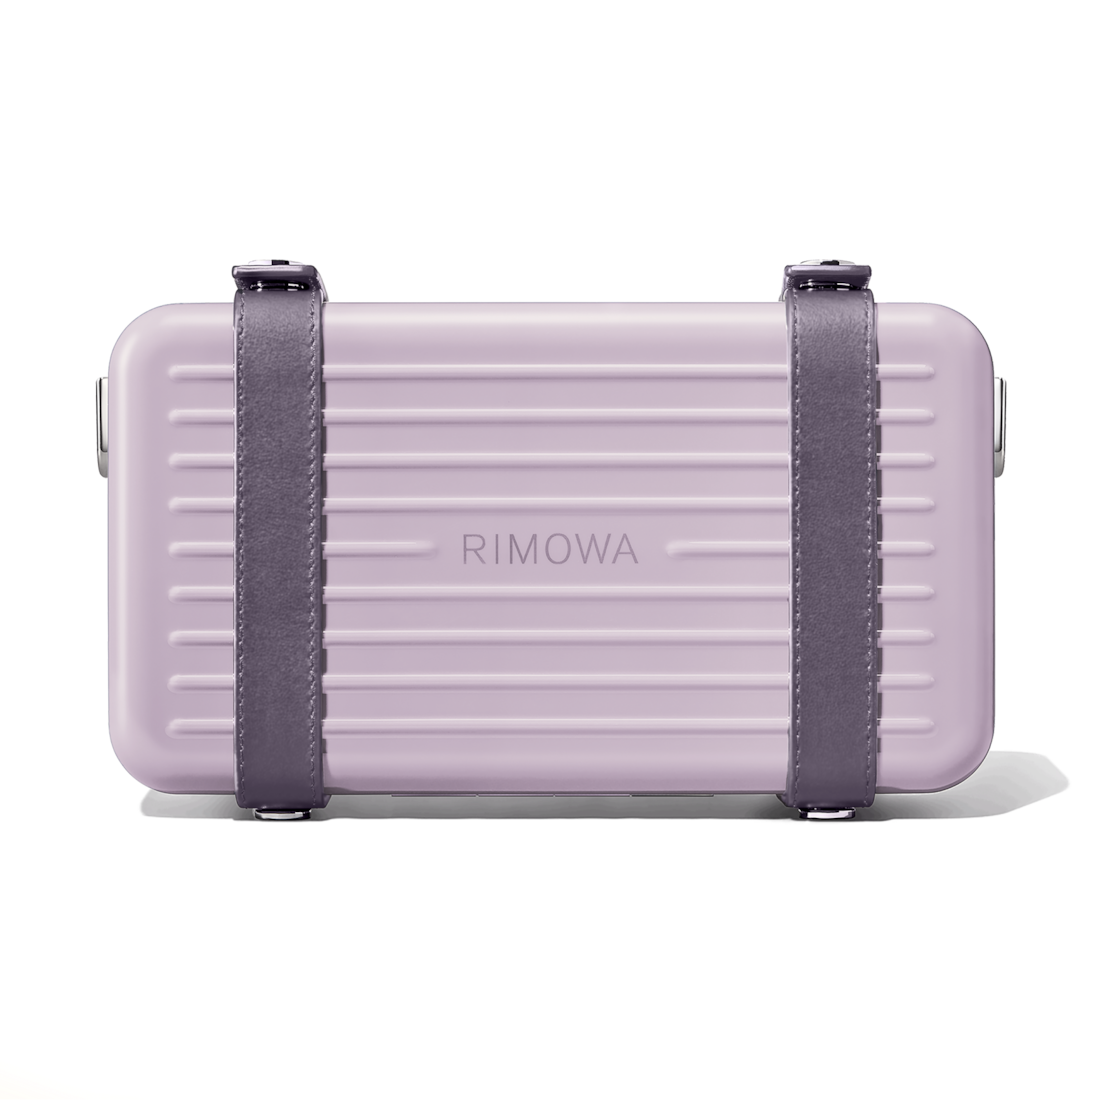 Personal Polycarbonate Cross-Body Bag | Lavande purple | RIMOWA